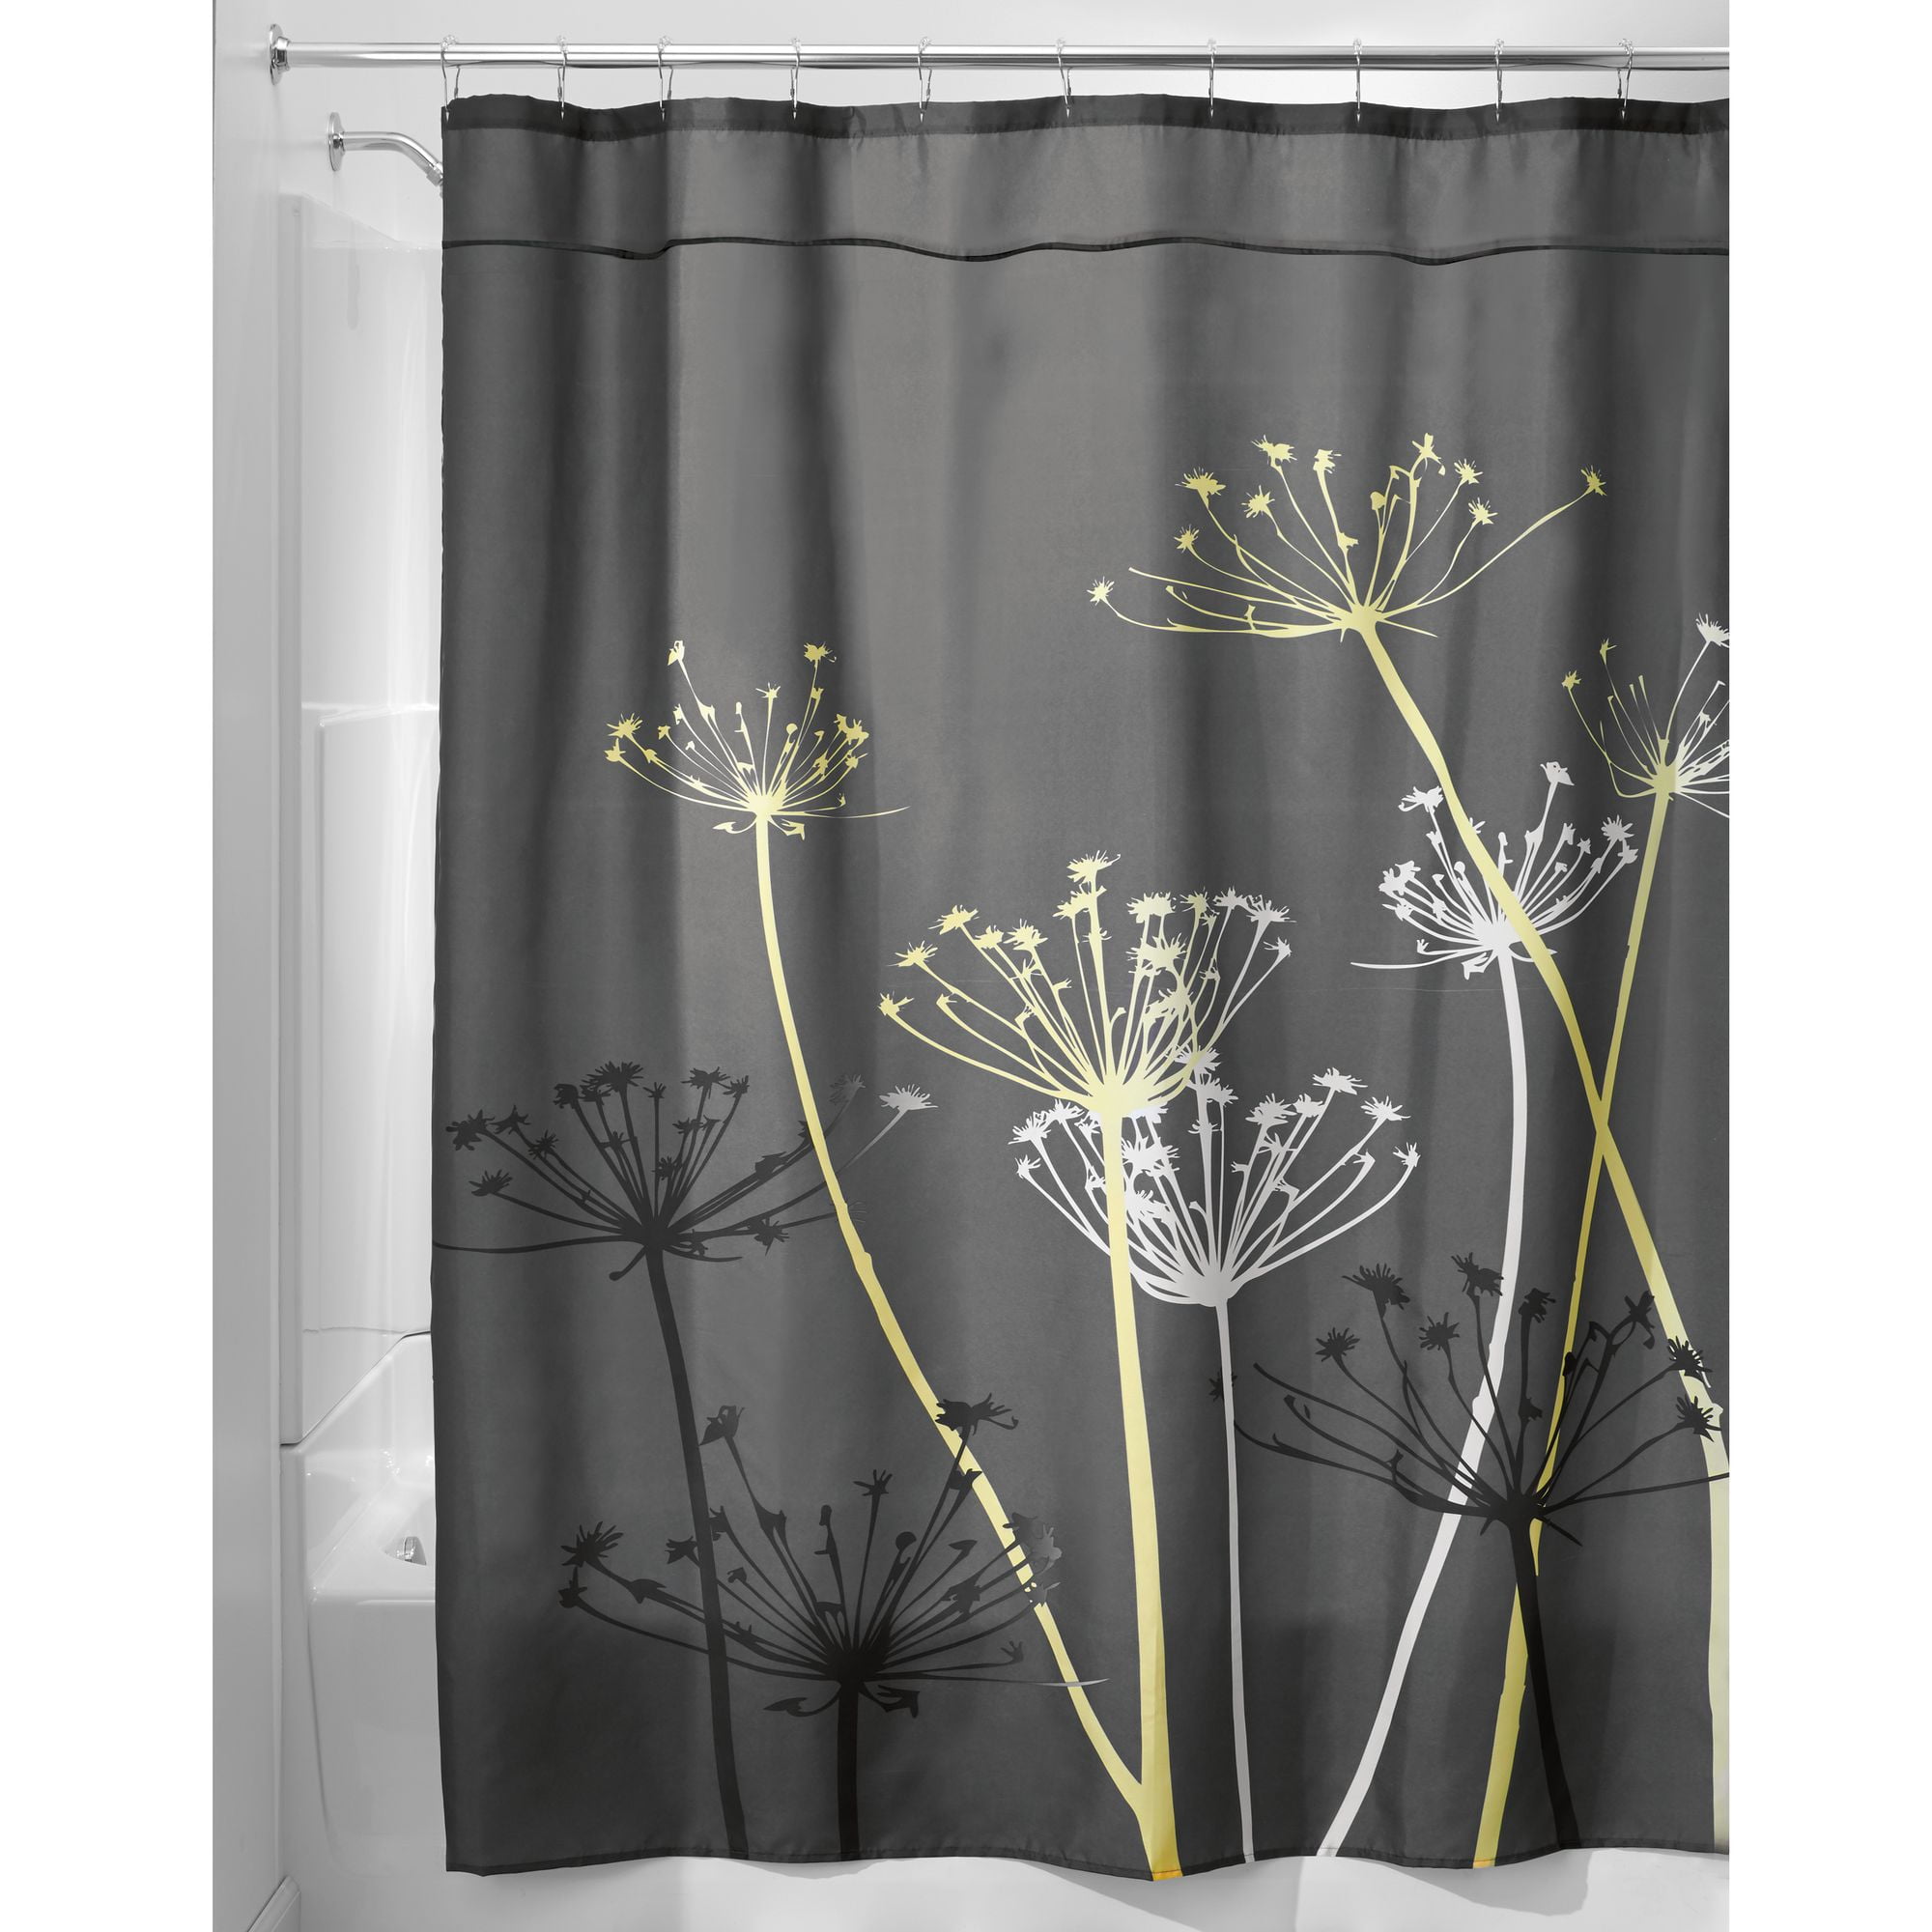 InterDesign Thistle Fabric Shower Curtain, Long, 72" x 84", Gray/Yellow